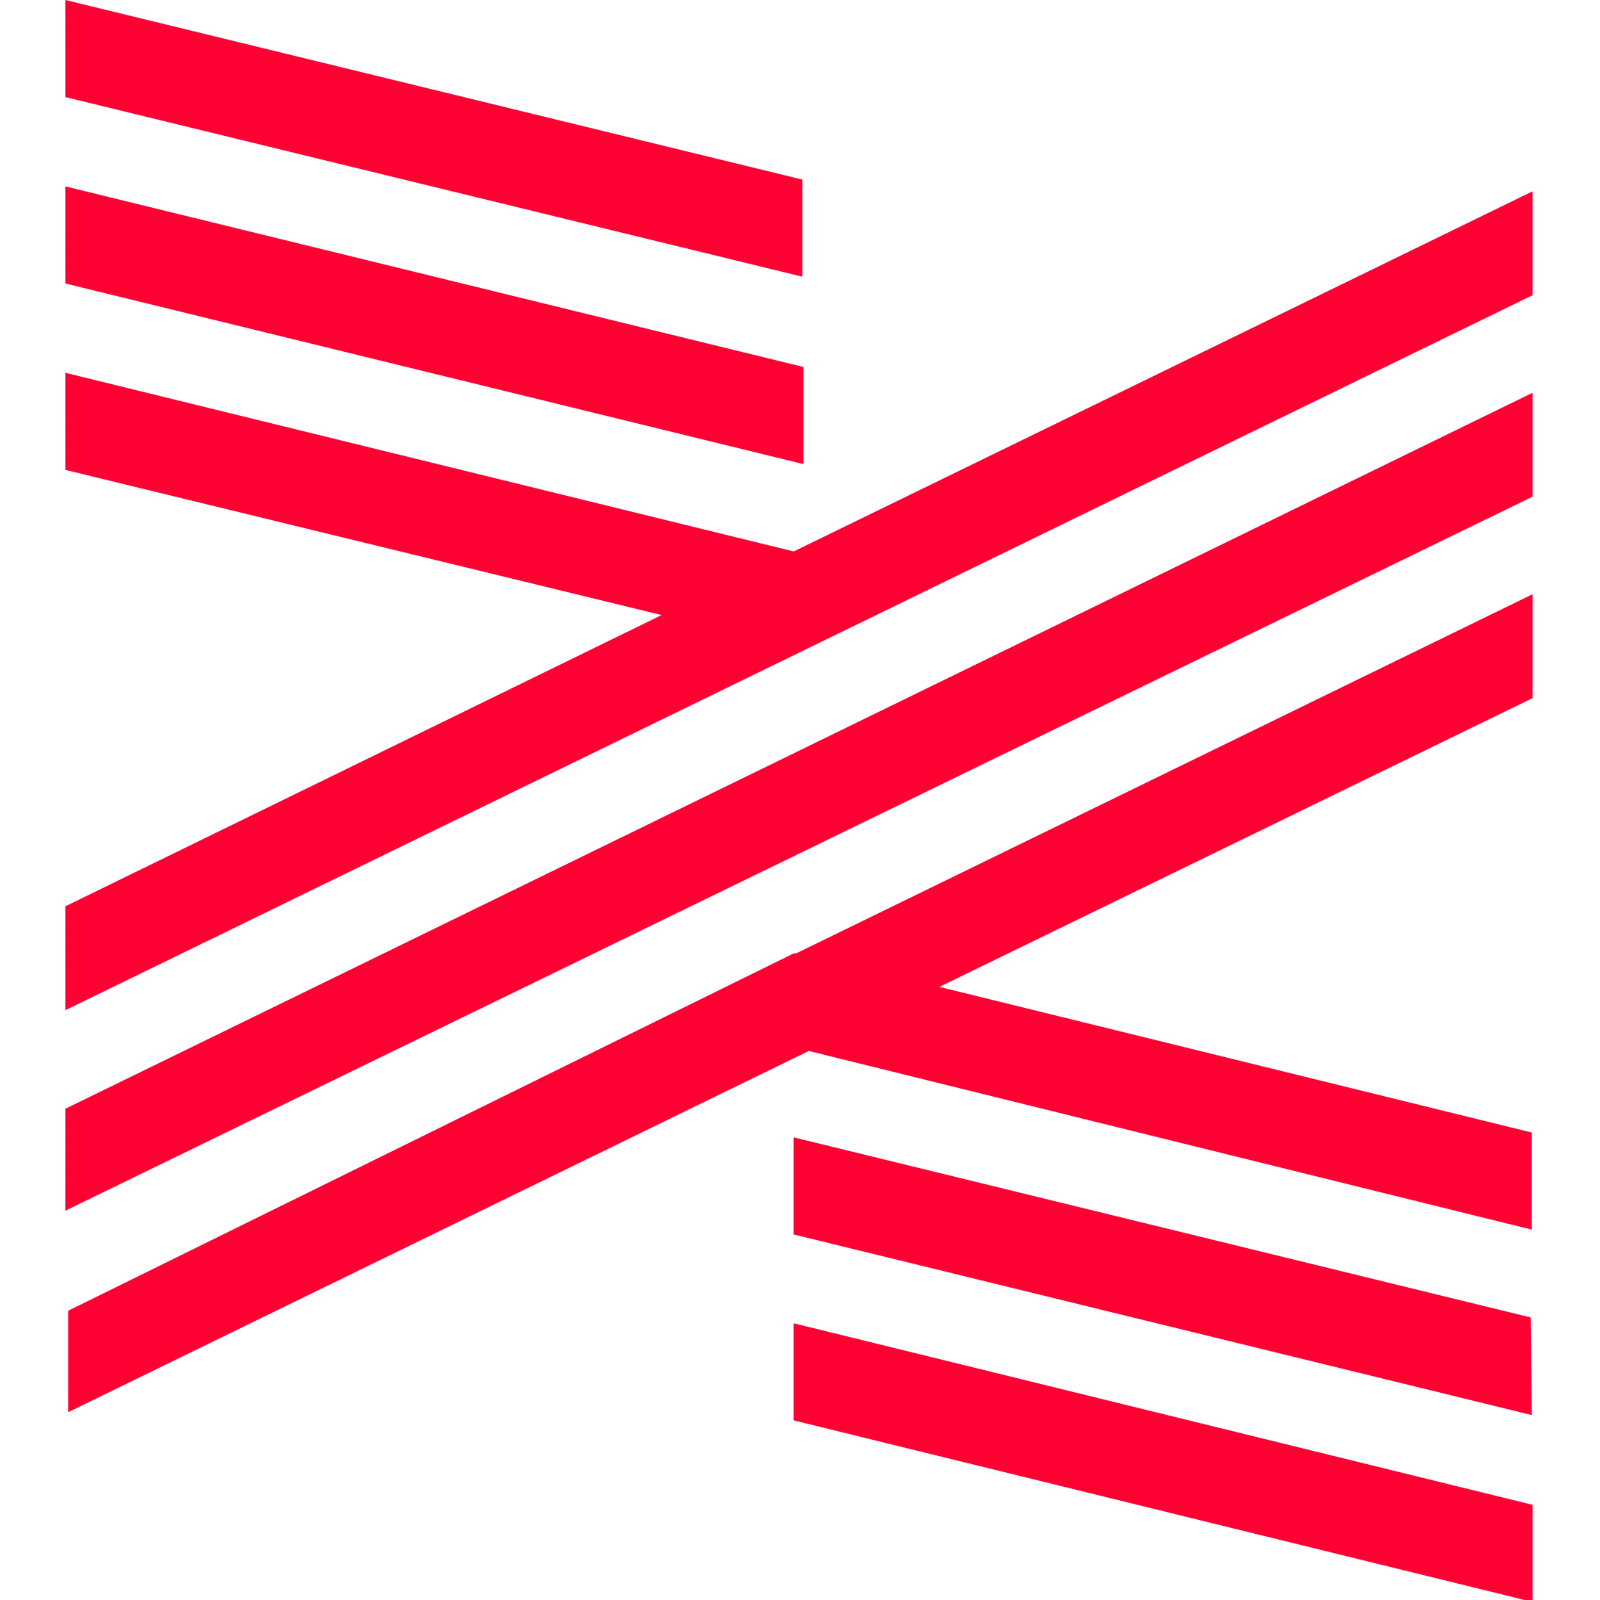 XMax Logo